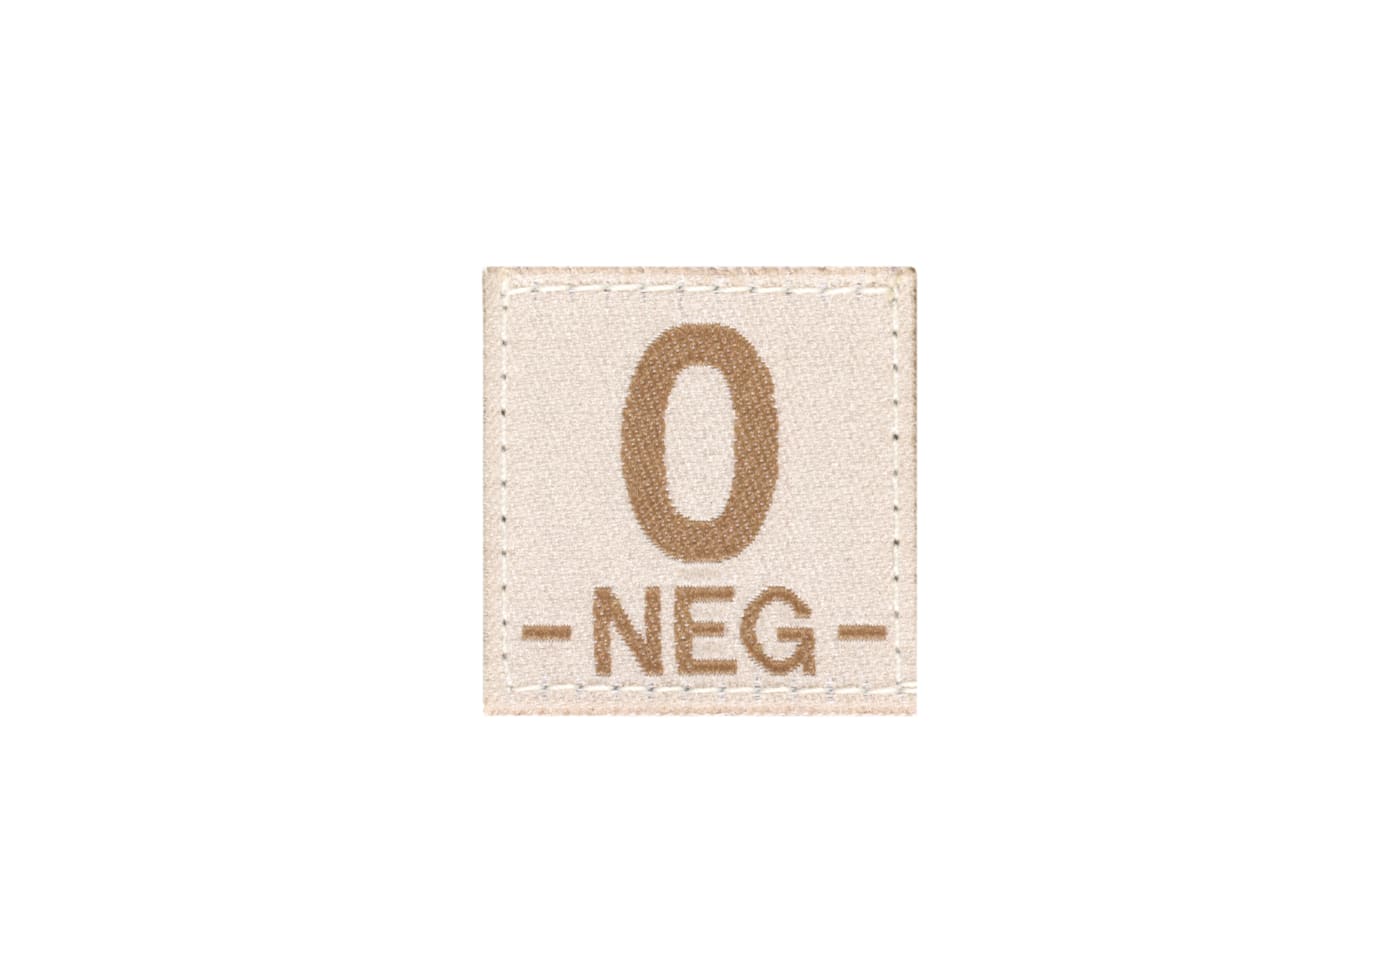 Clawgear 0 Neg Bloodgroup Patch